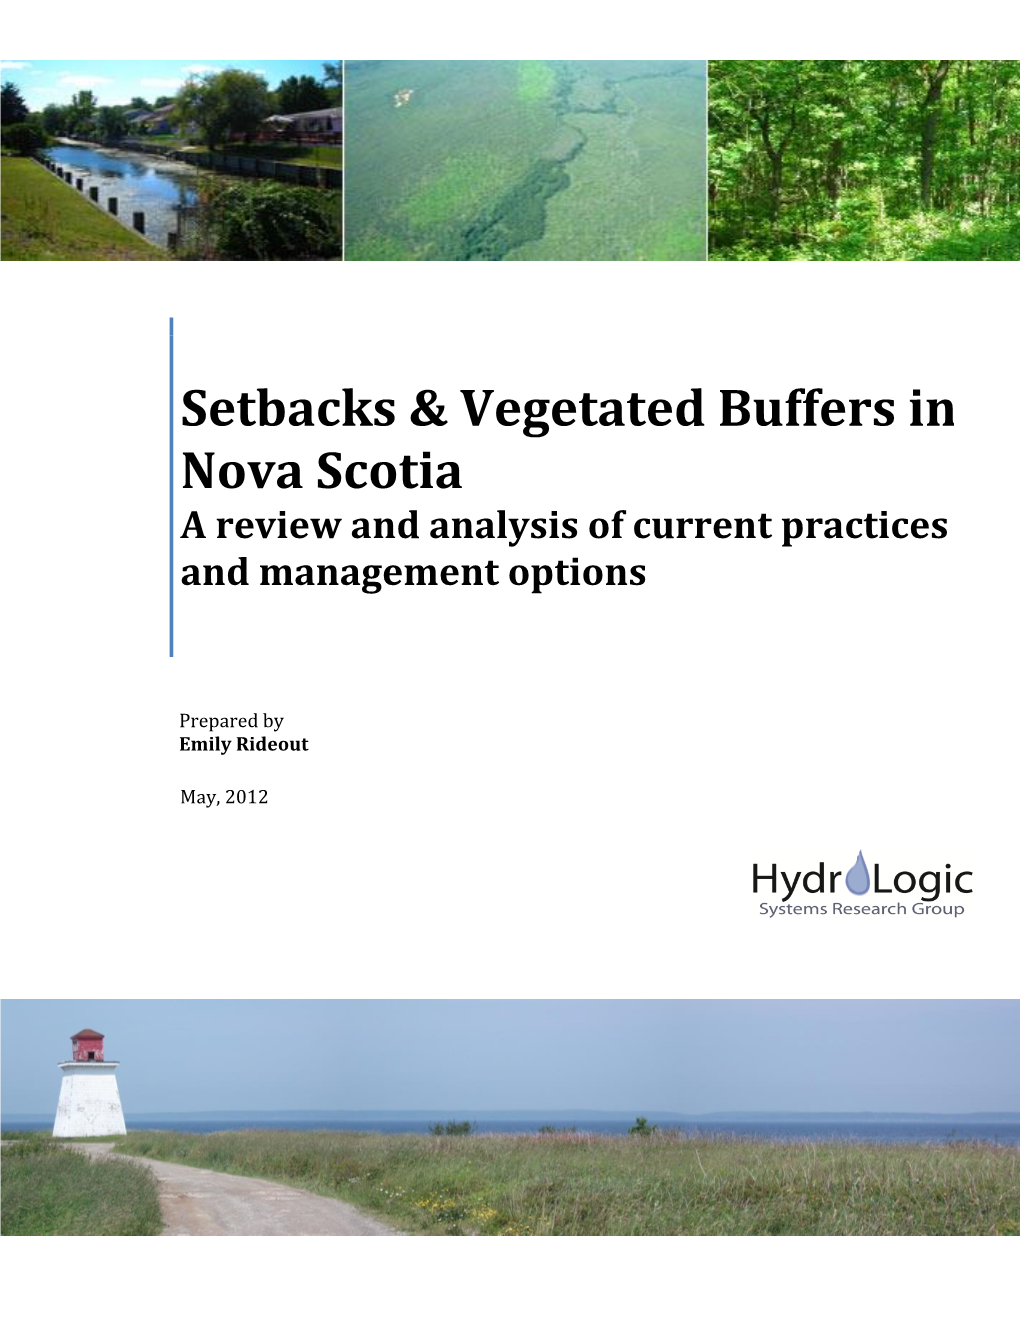 Setbacks & Vegetated Buffers in Nova Scotia